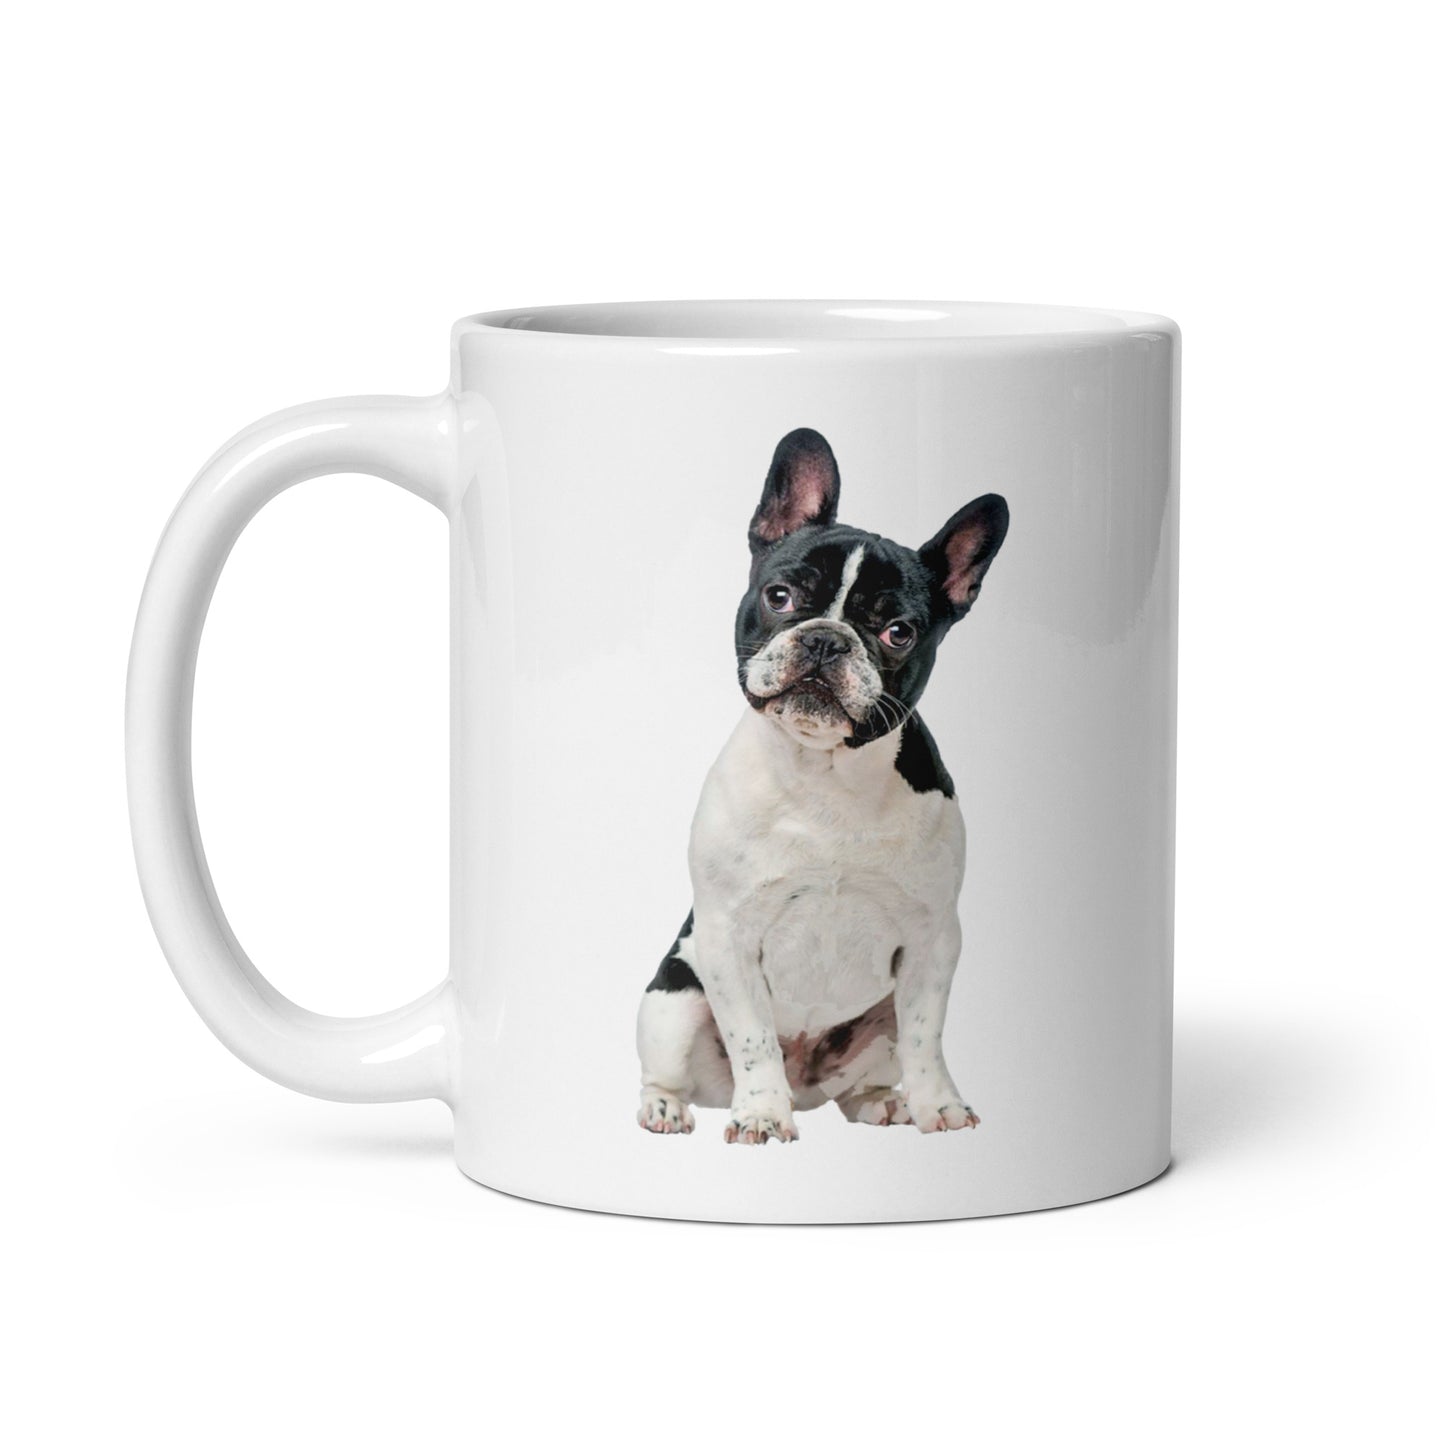 White glossy mug printed with a French bull dog